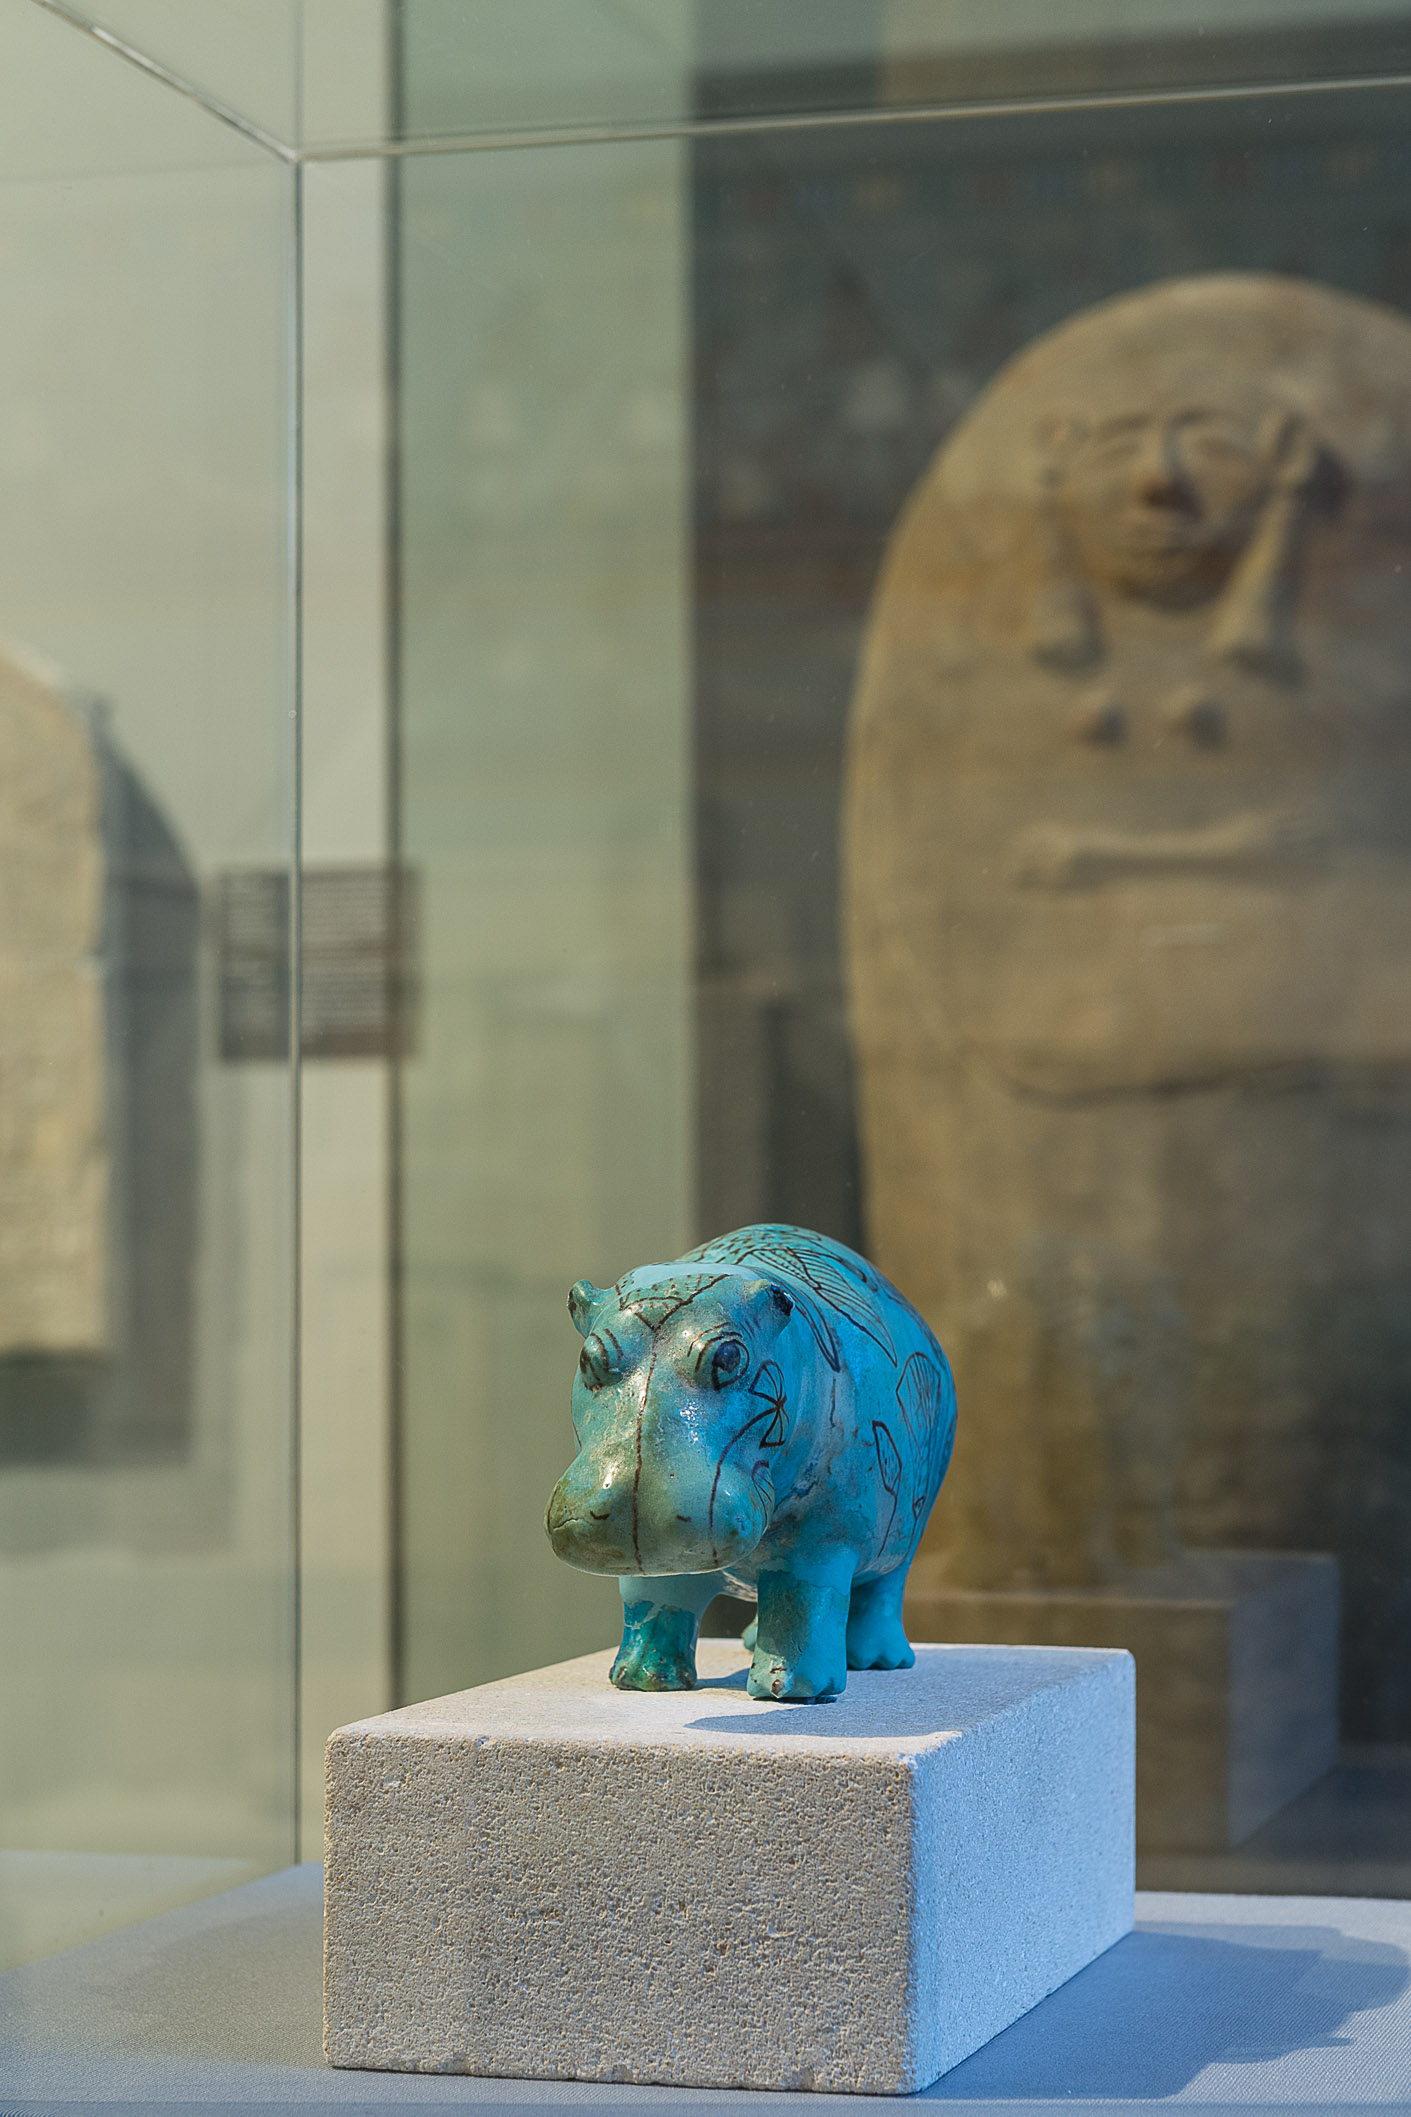 Hippopotame by Artiste Inconnu - c. 2000 BC Kunsthistorisches Museum